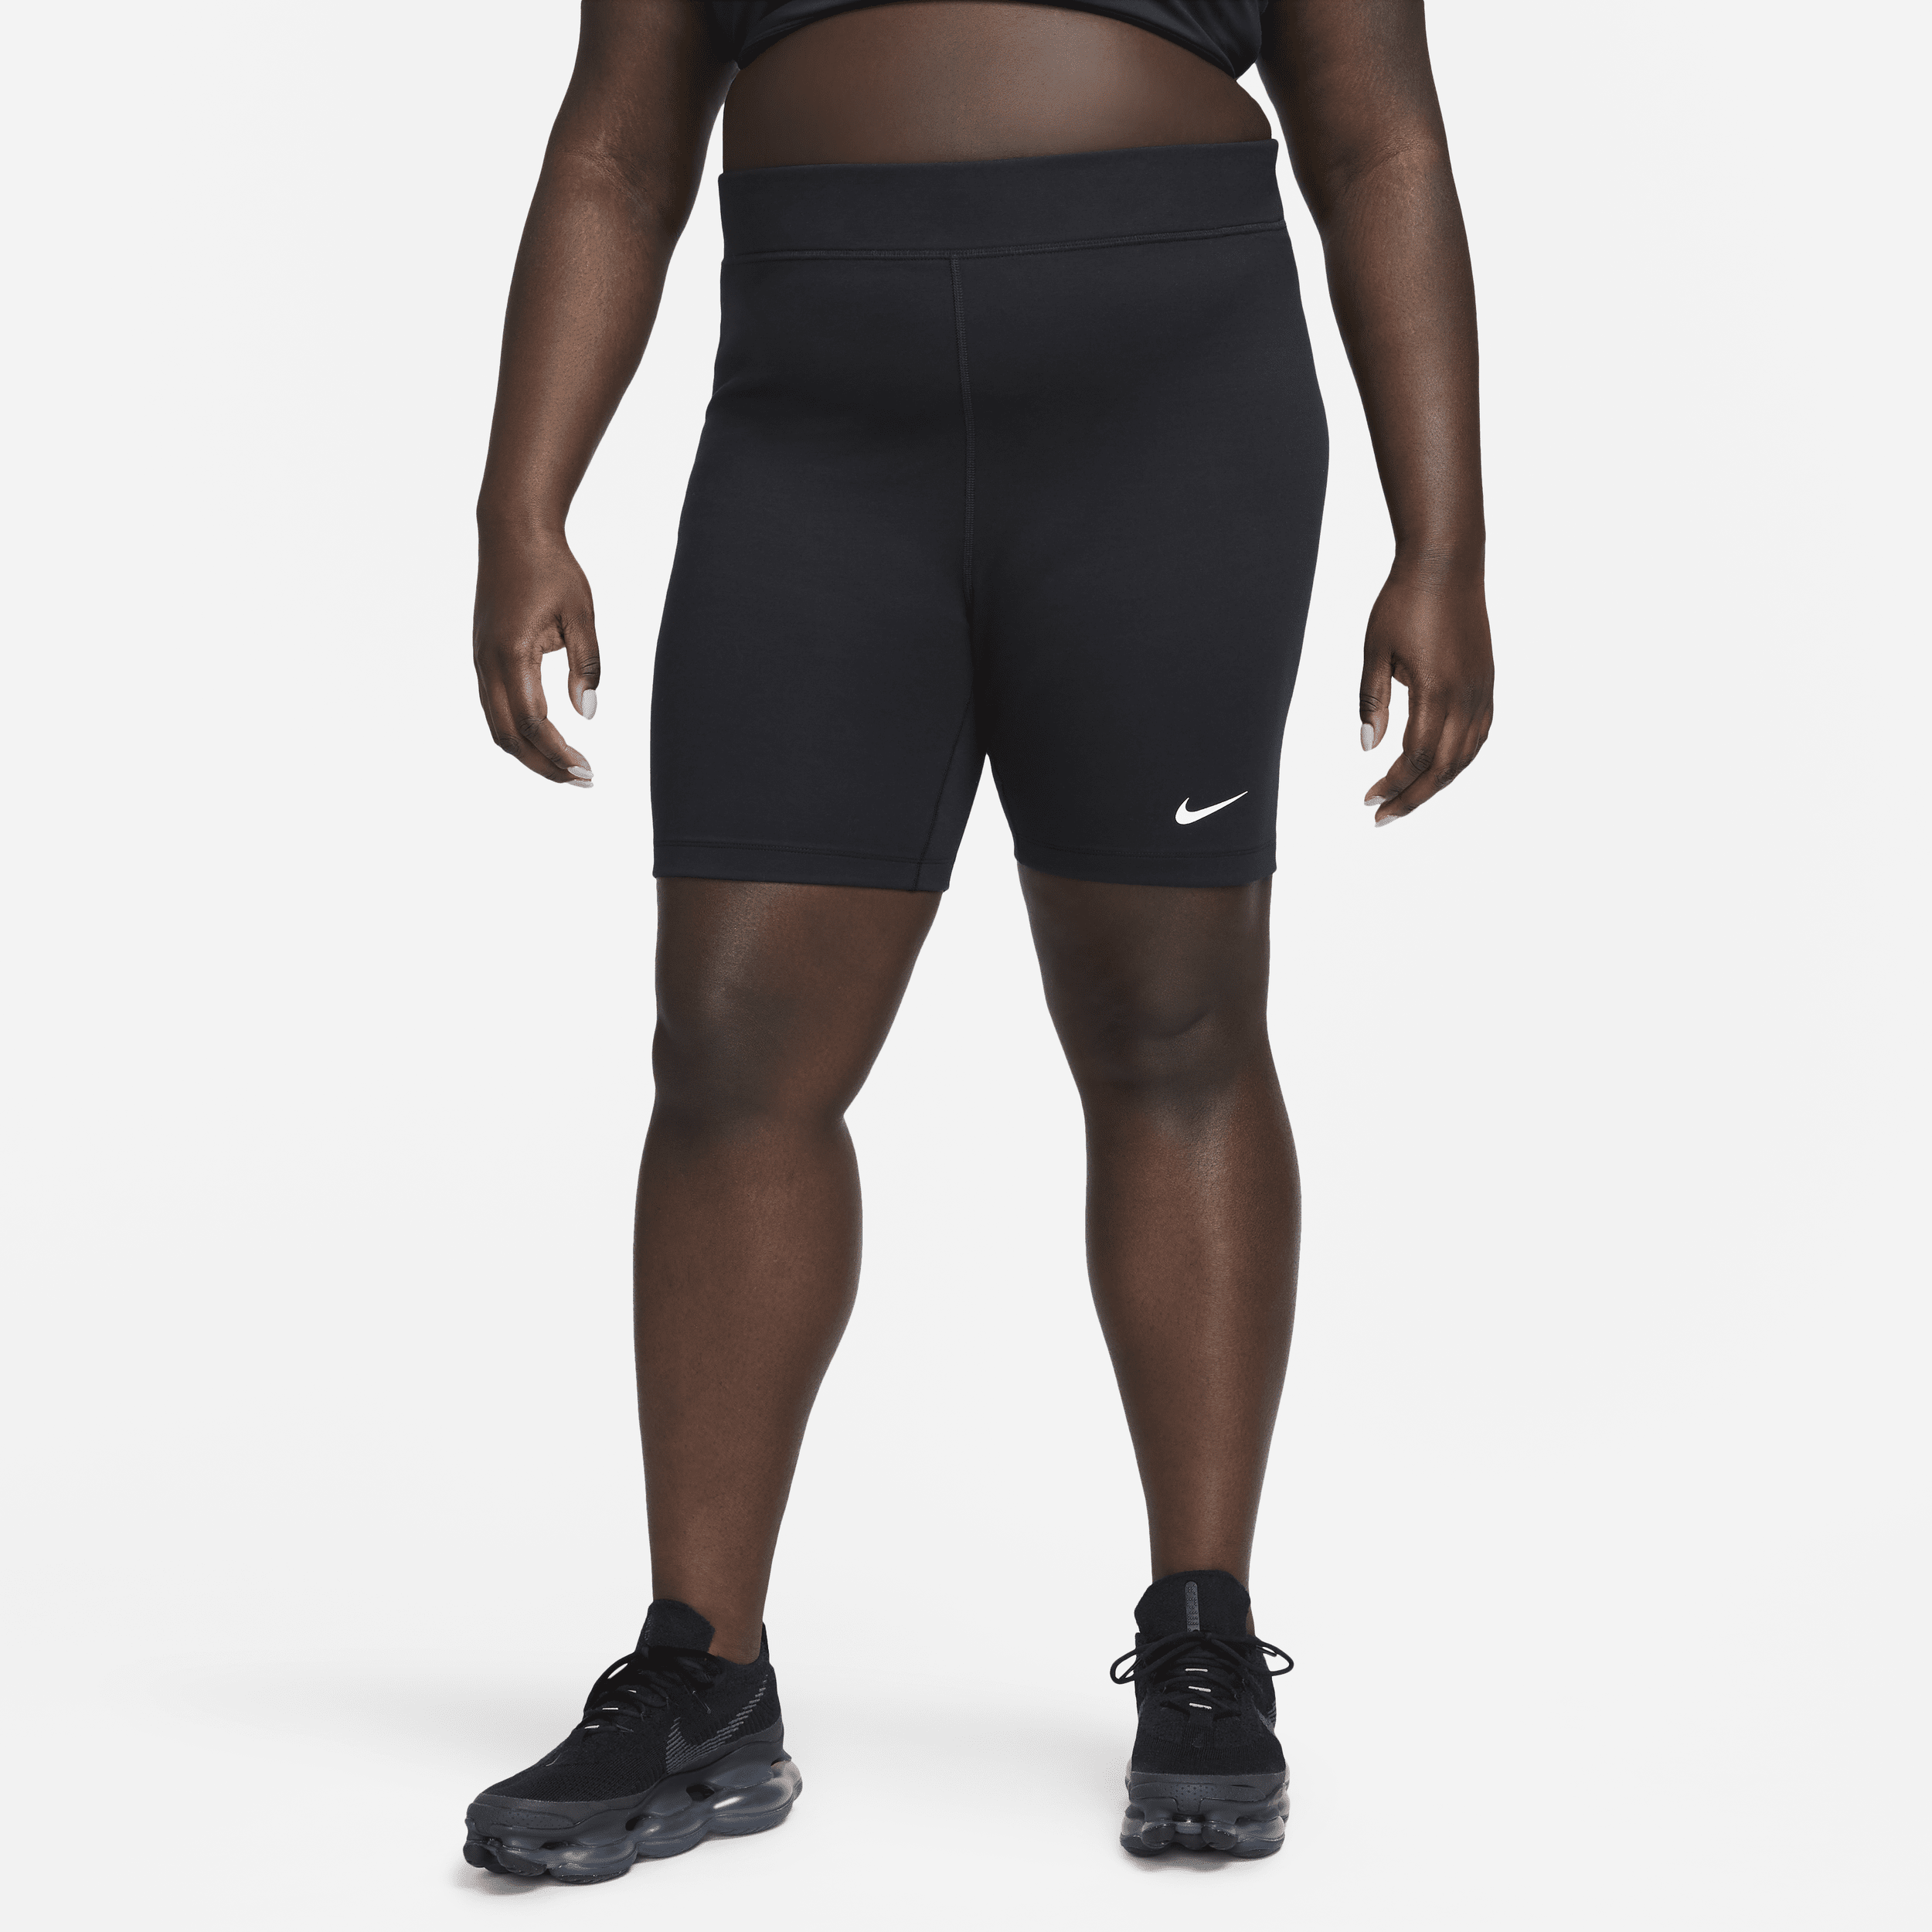 Nike Sportswear Classic Mallas cortas de 20 cm y talle alto - Mujer - Negro